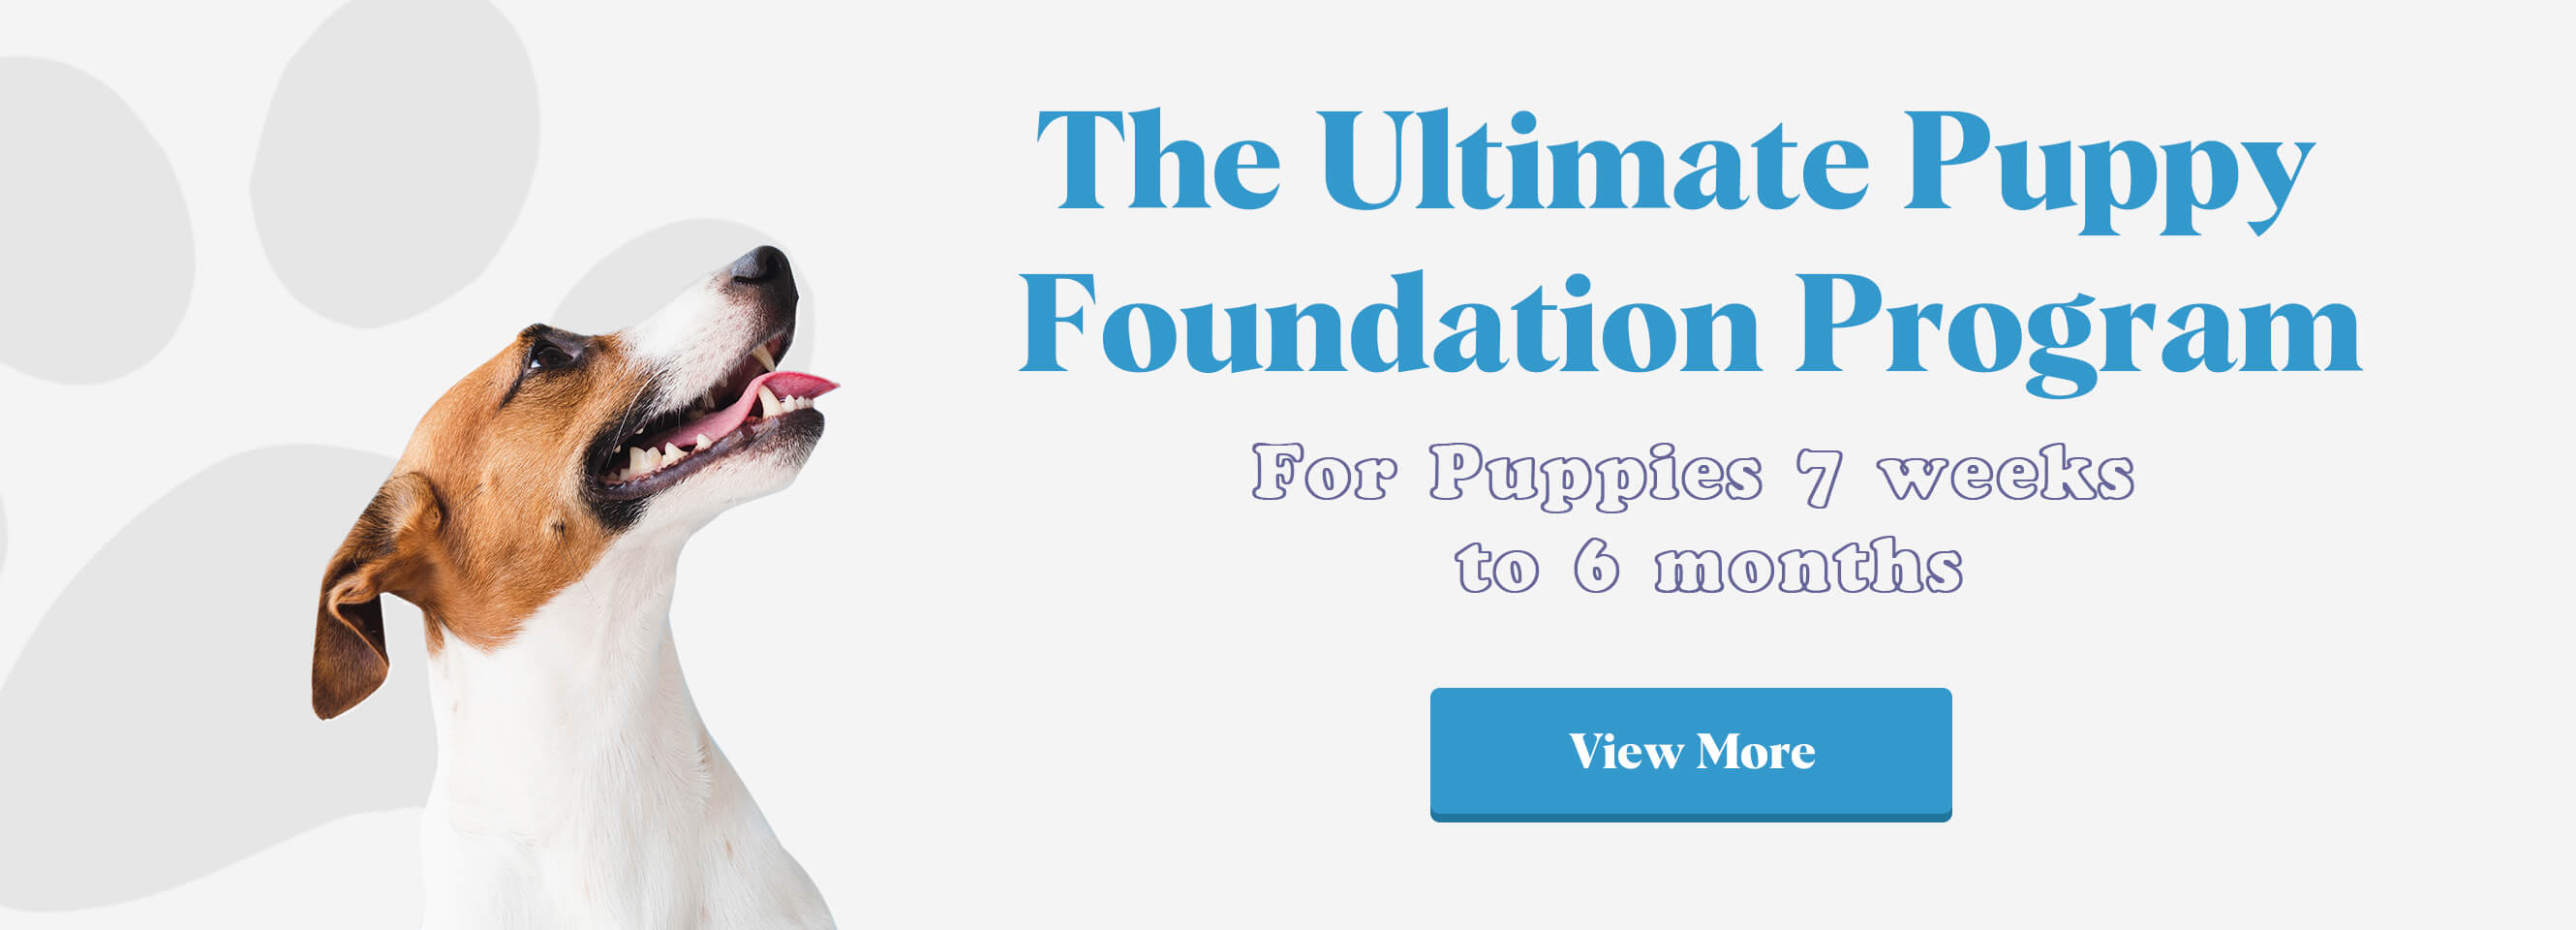 Beyond Puppy Basics: Try Puppy-Safe Sport Foundation Games